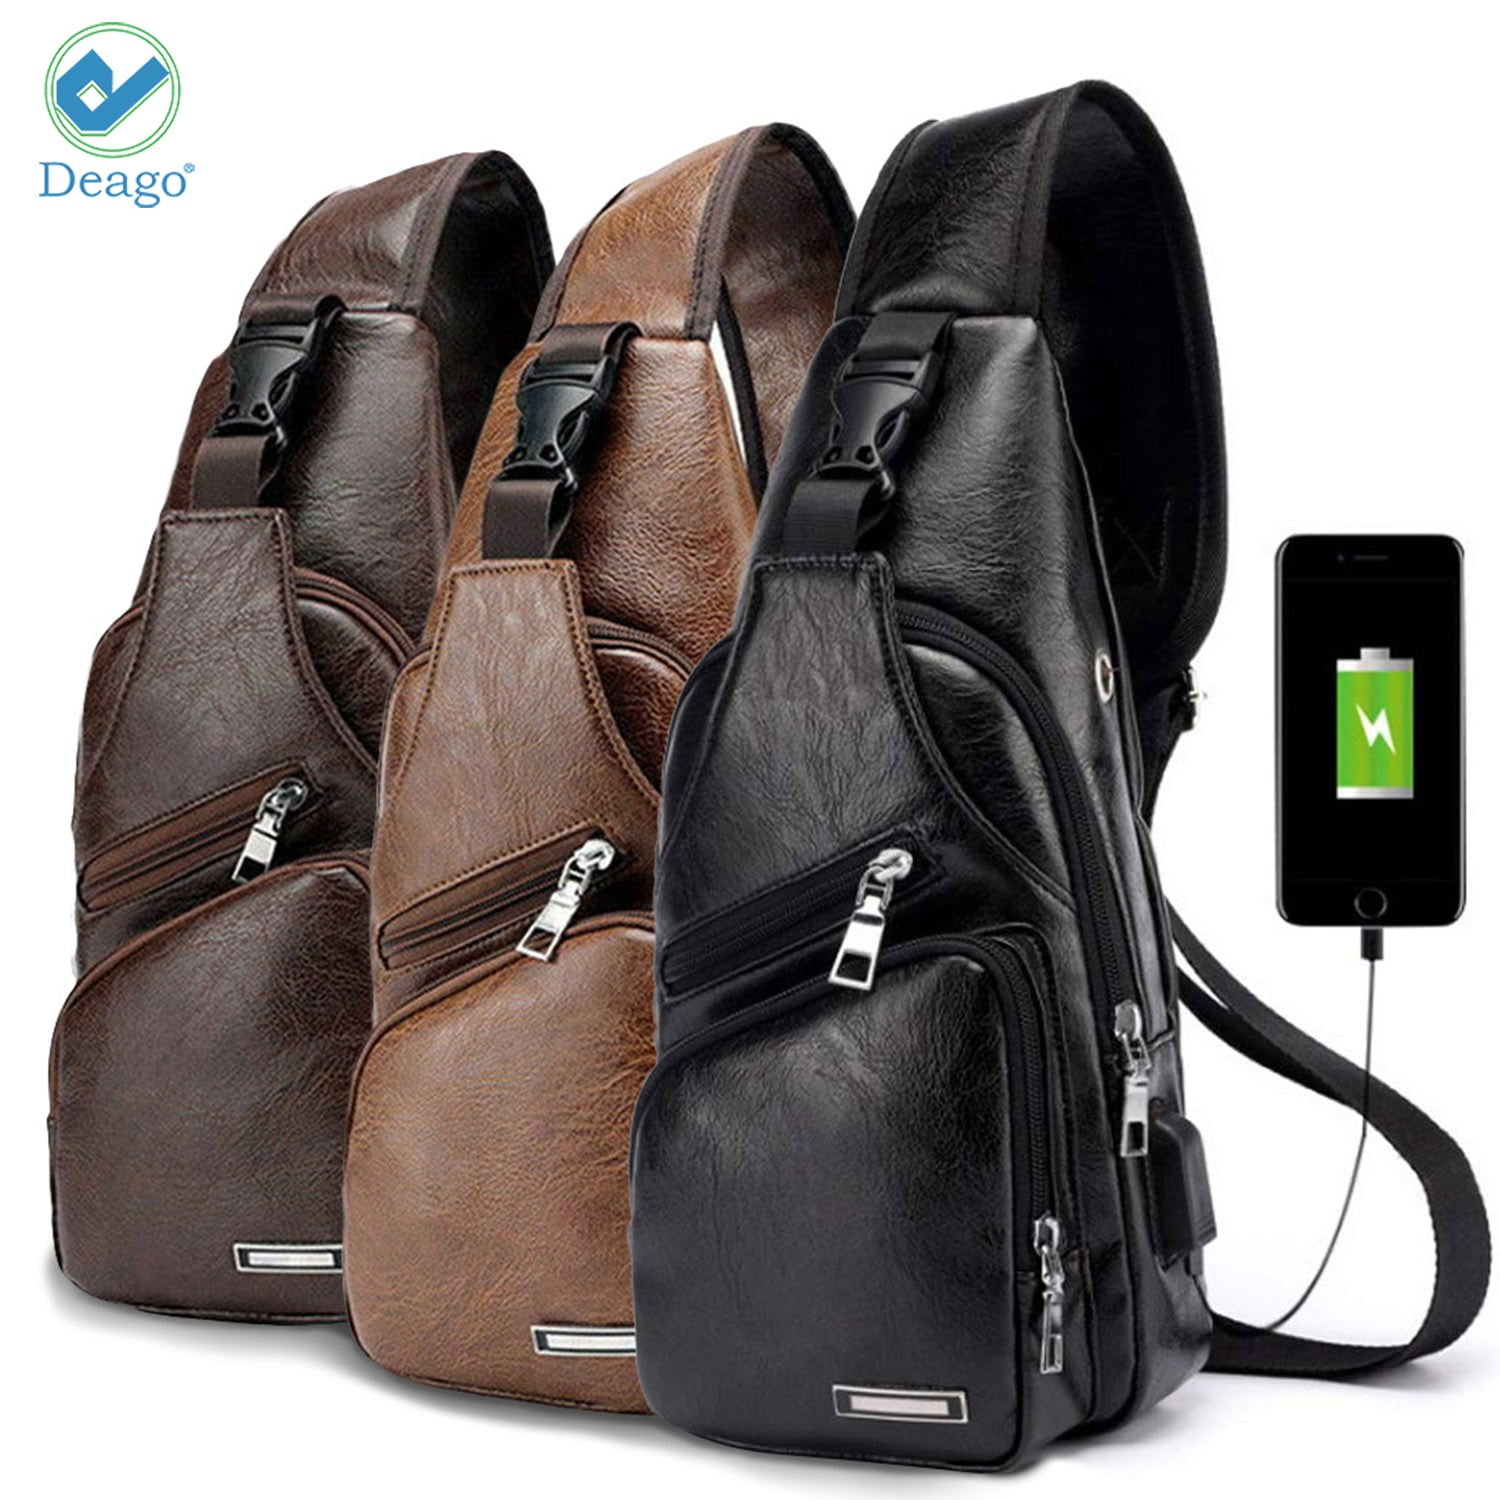 CWeep Headphone Men PU Leather Crossbody Sling Bag,Shoulder Chest Backpack USB Charging Port/Headphone Interface Anti Theft Travel/Hiking/School Dark Brown